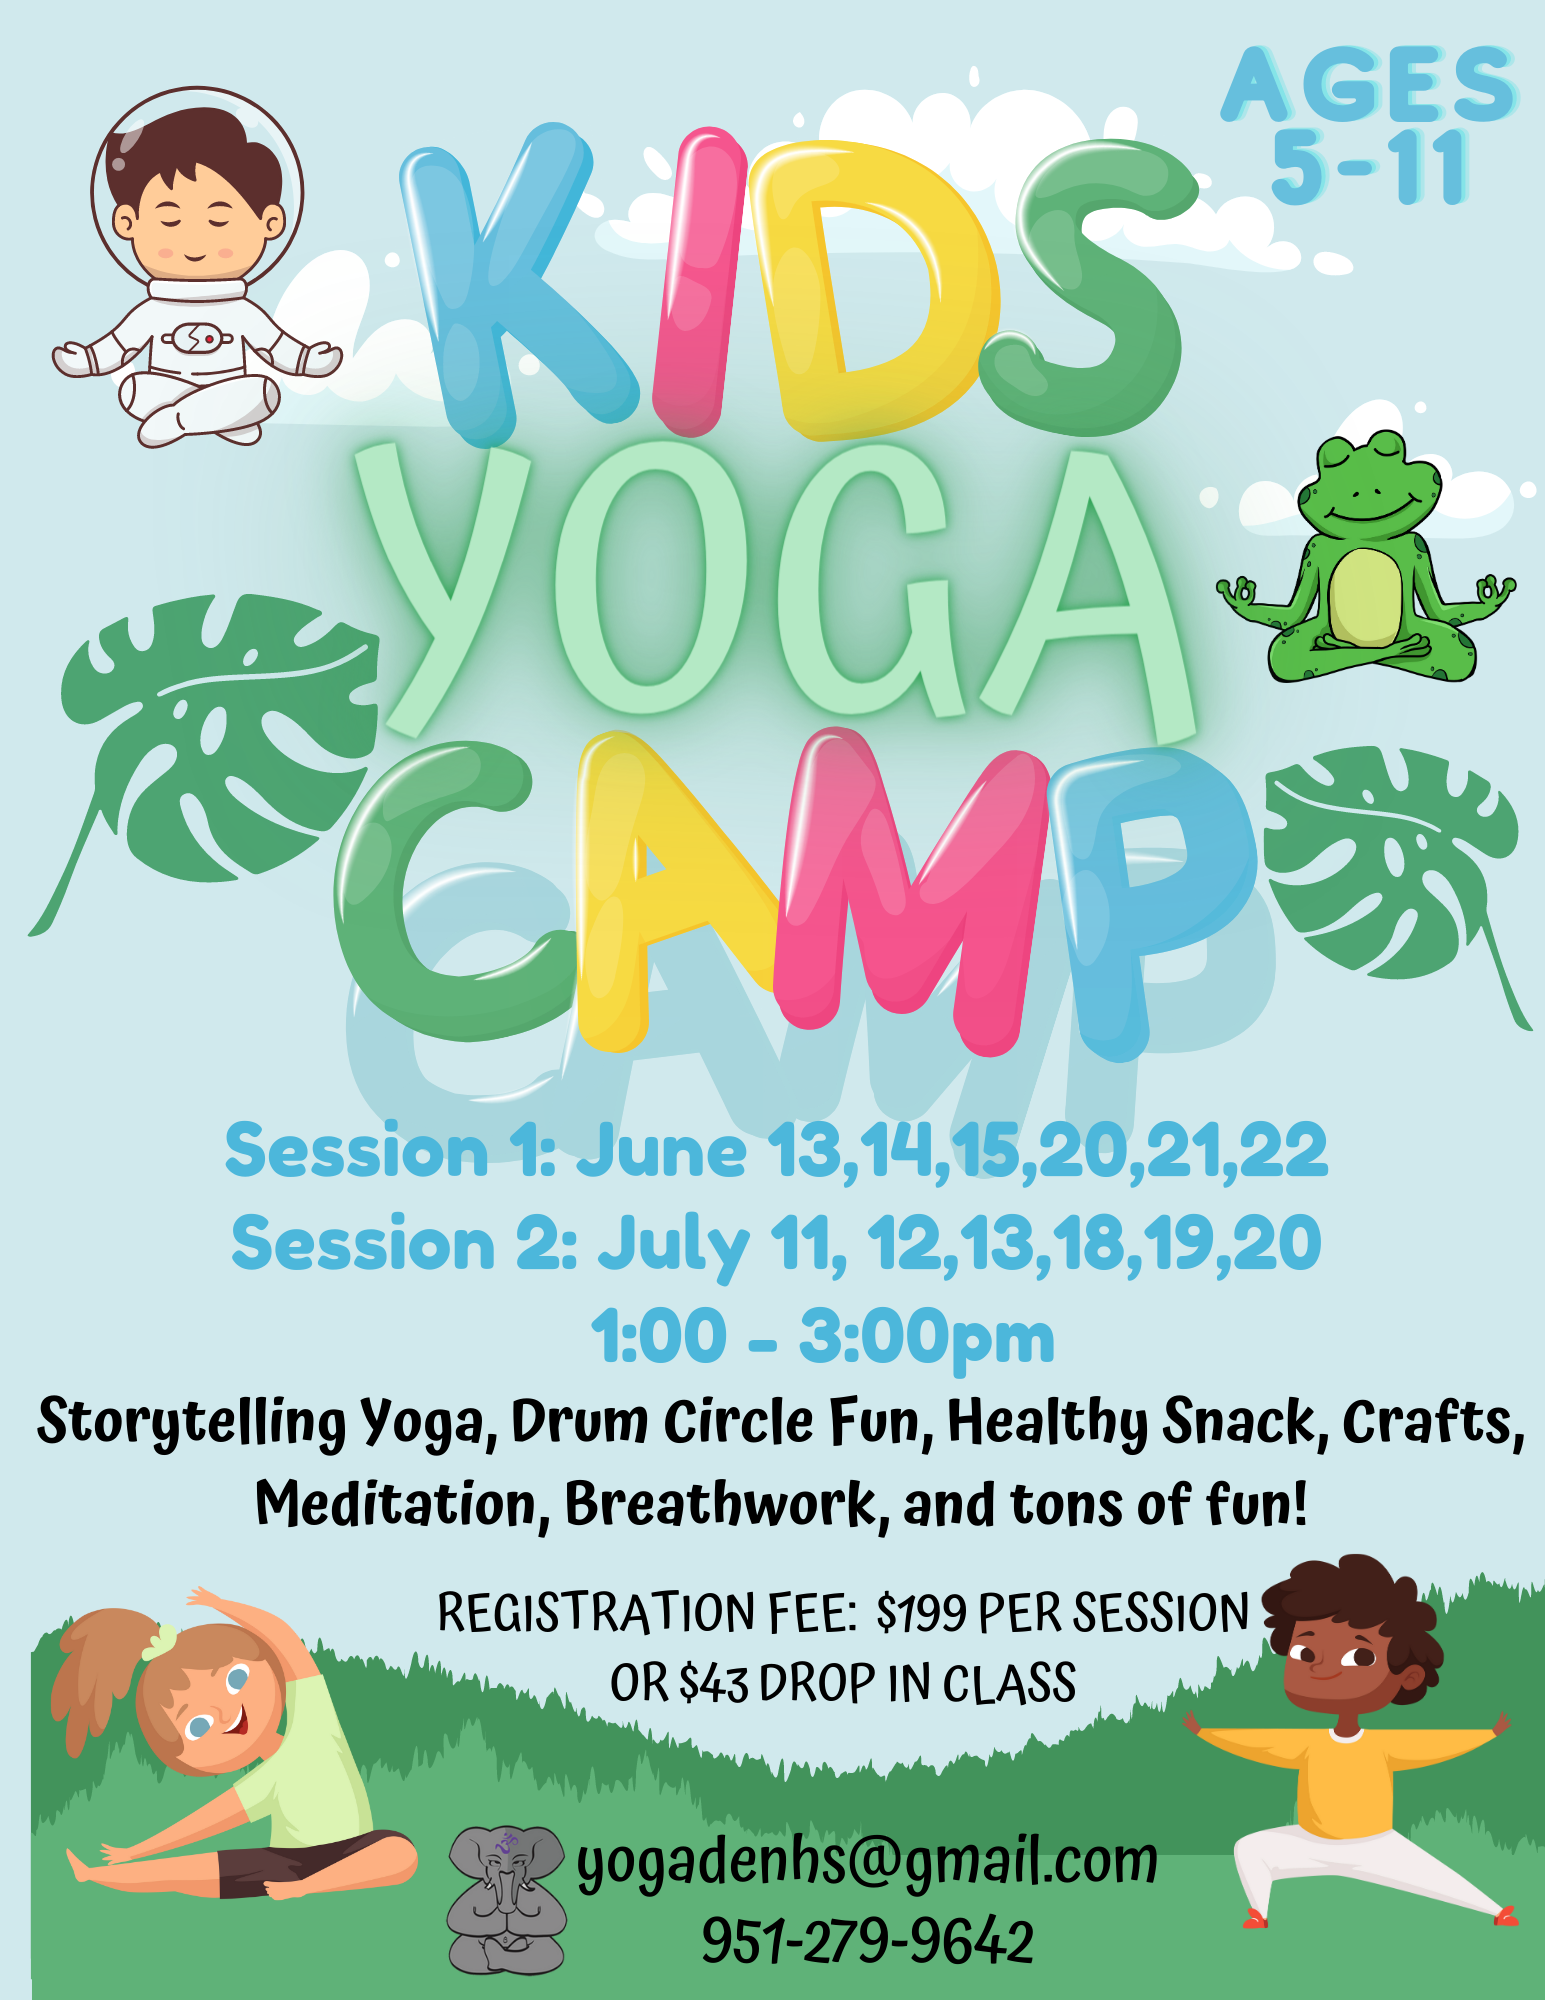 Kids Yoga Camp - Session 1